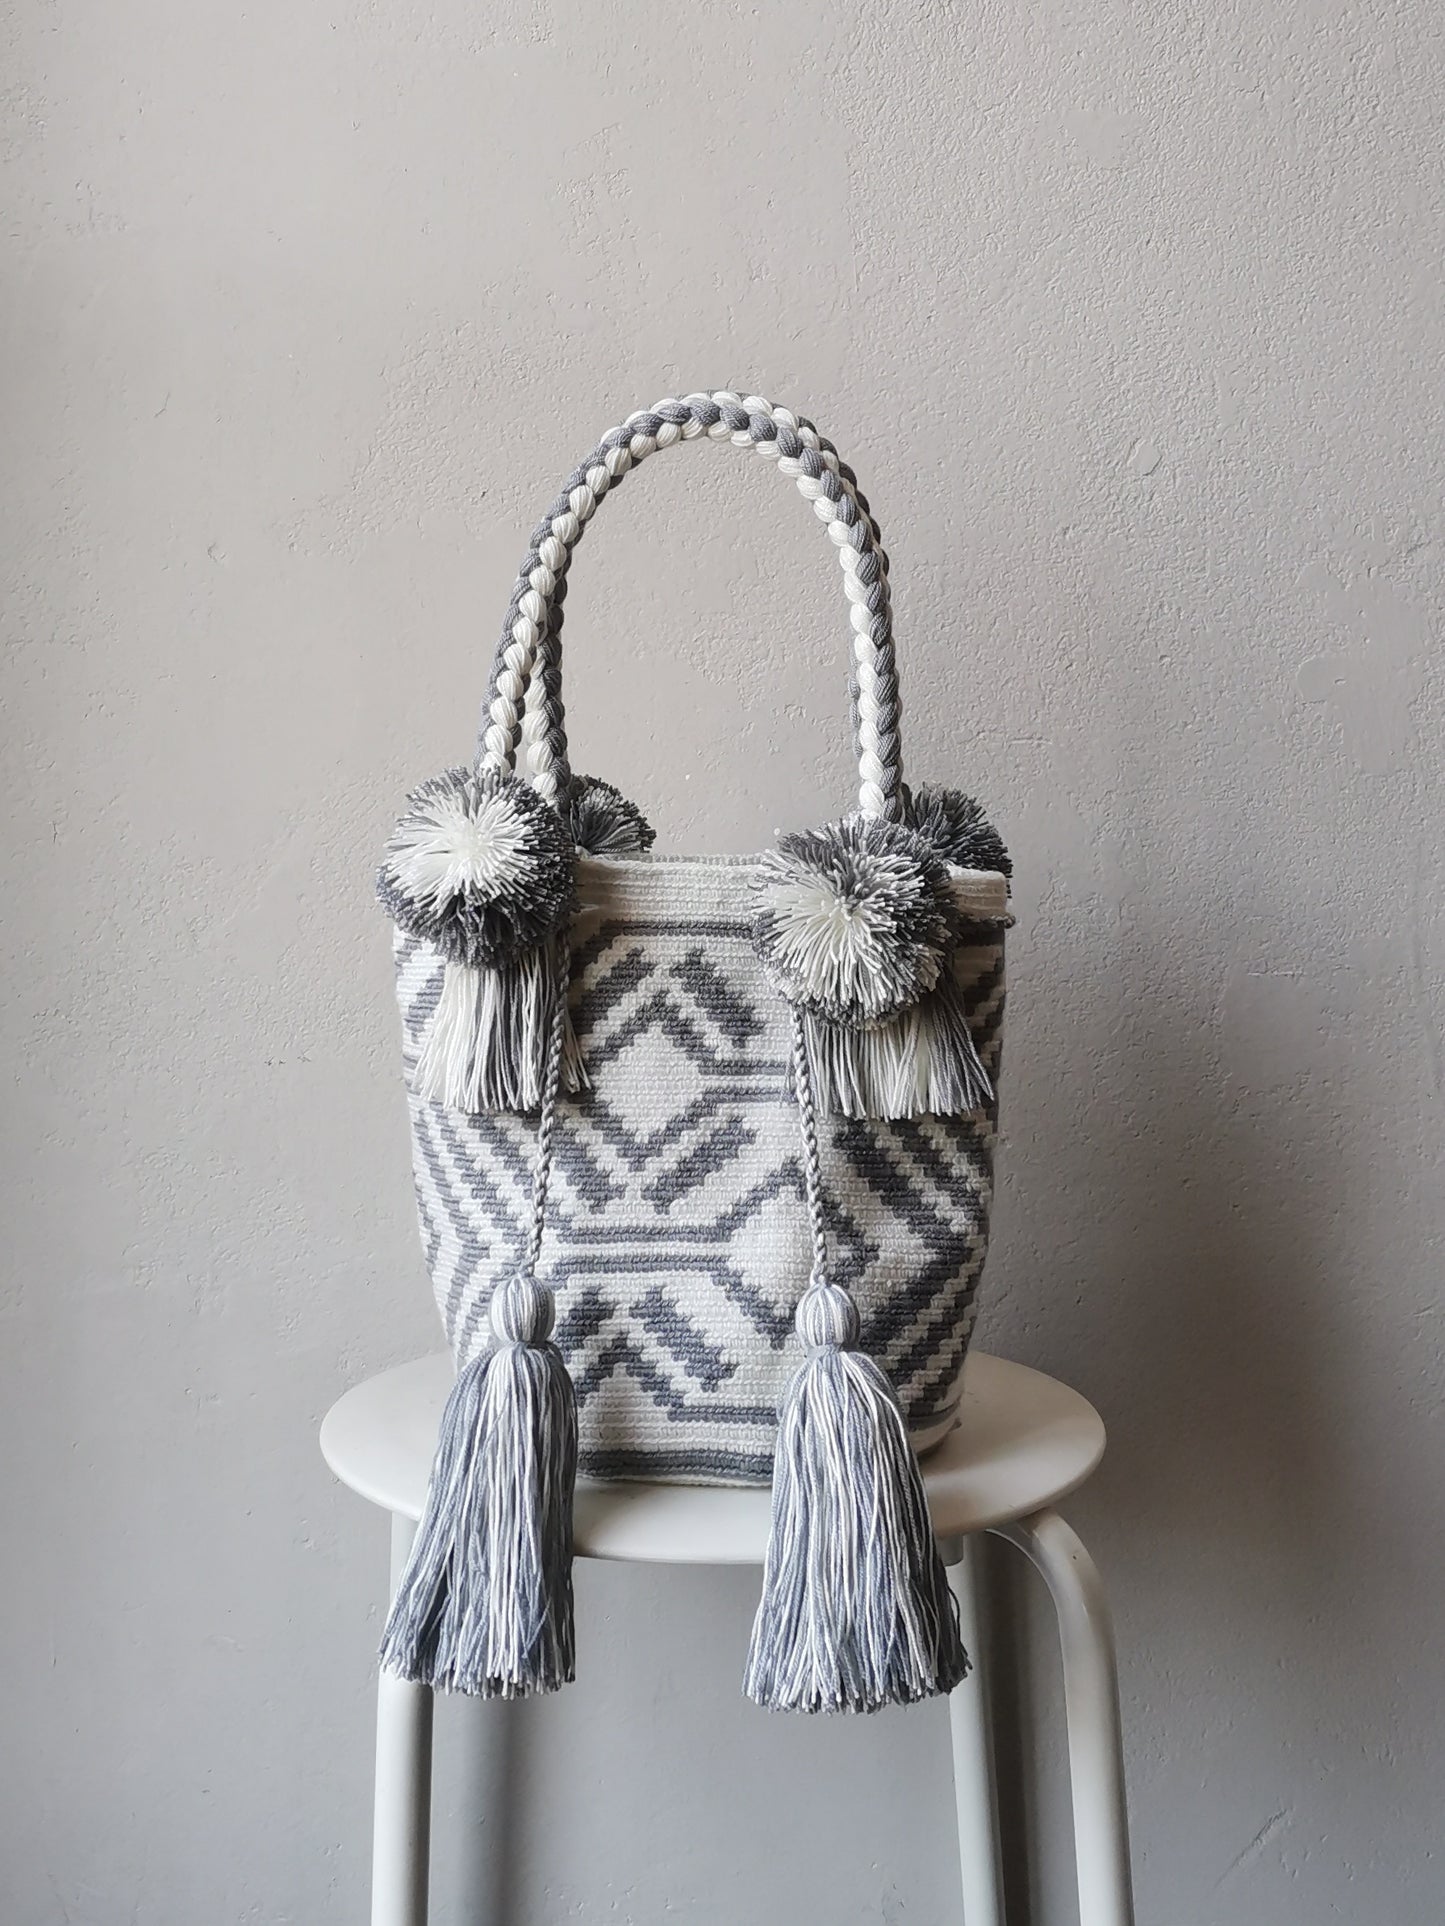 END OF SERIES - White and gray M mochila handbag